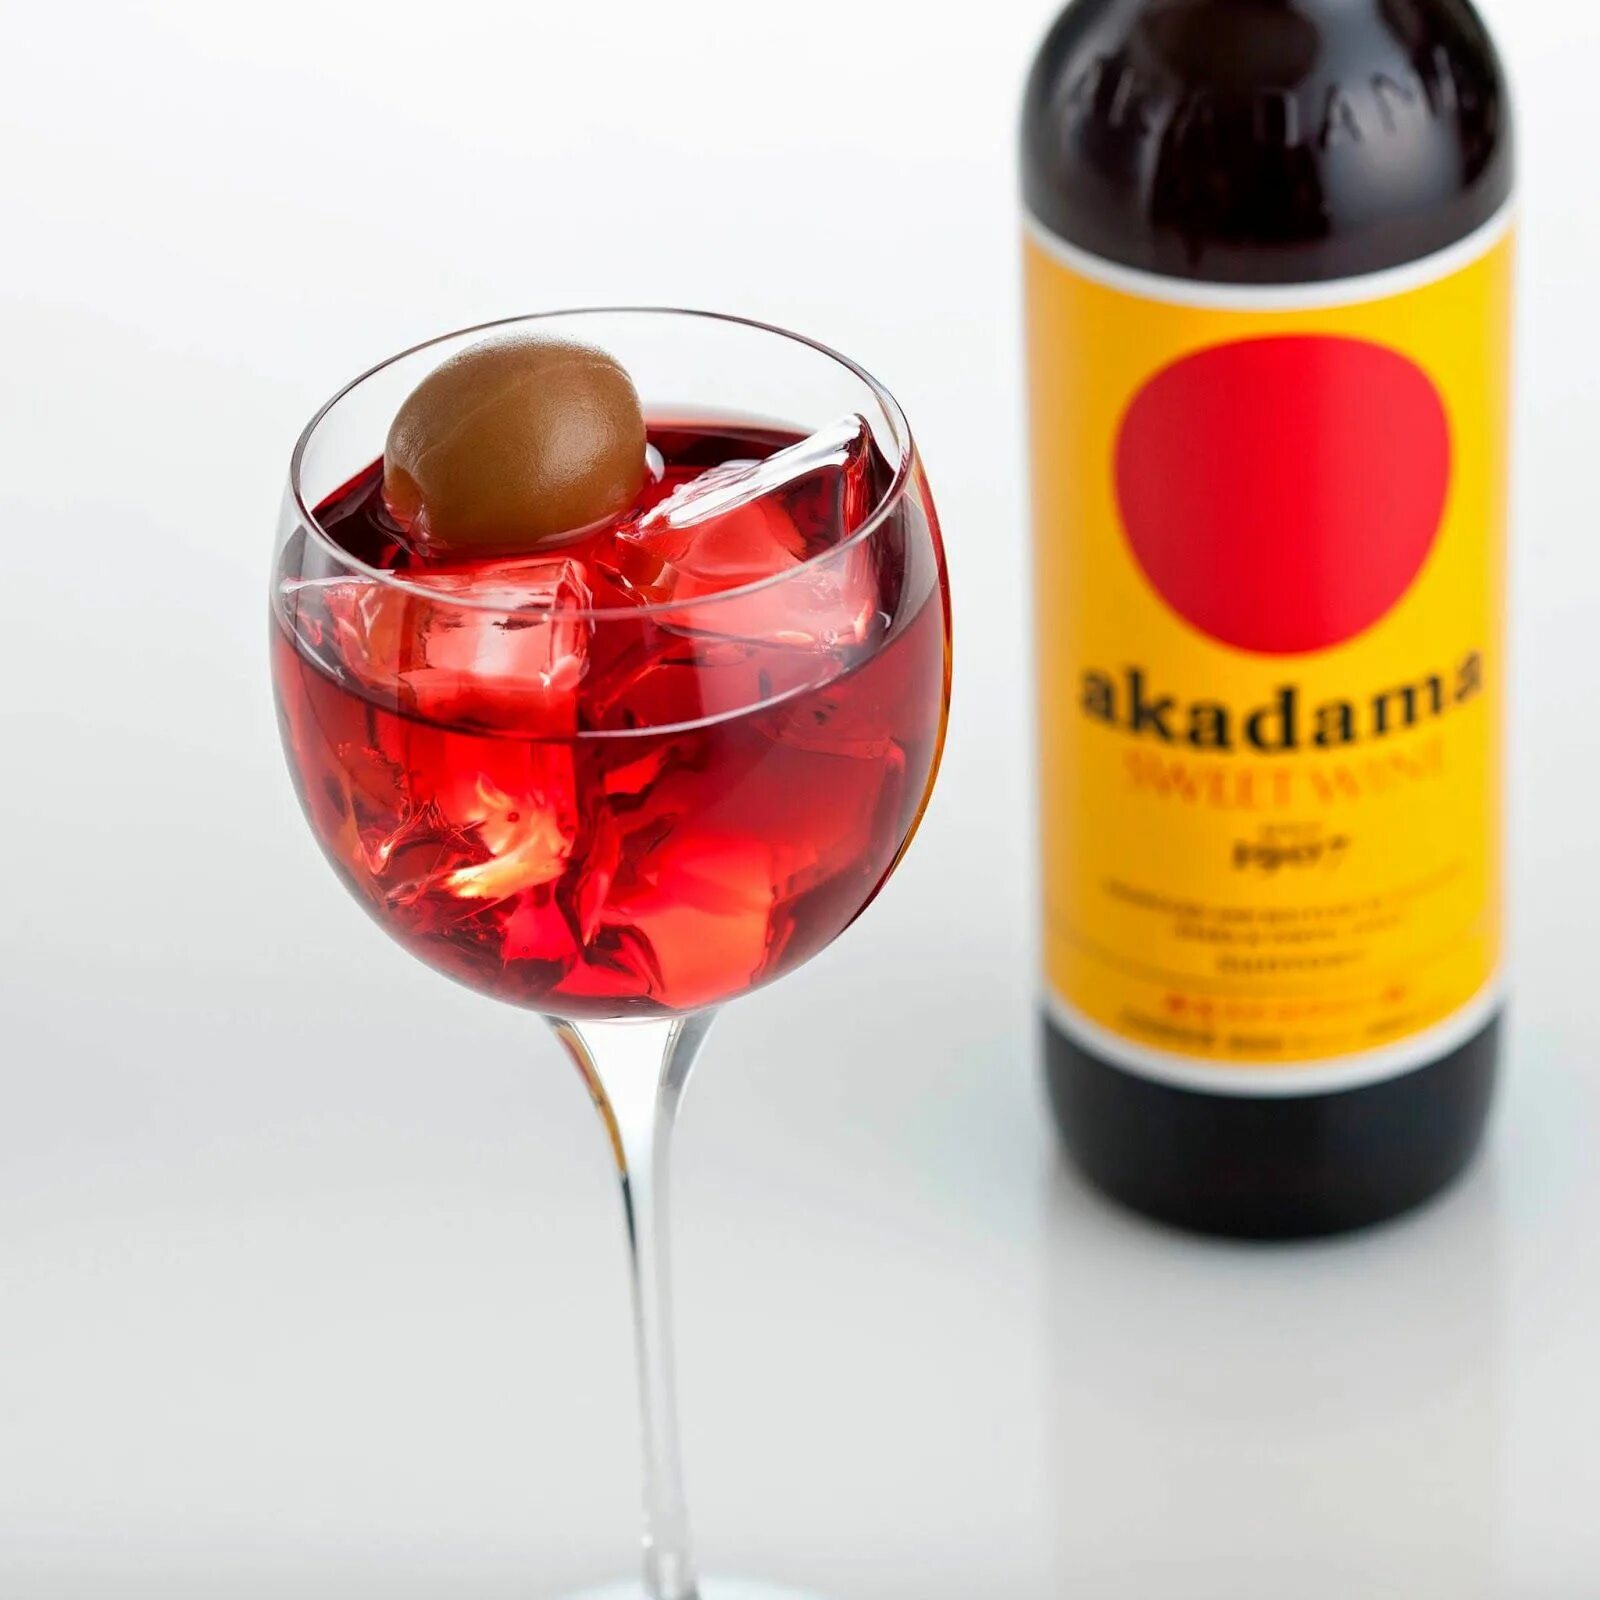 Акадама вино. Akadama вино Япония. Японское вино Сантори. Сантори вино Акадама.